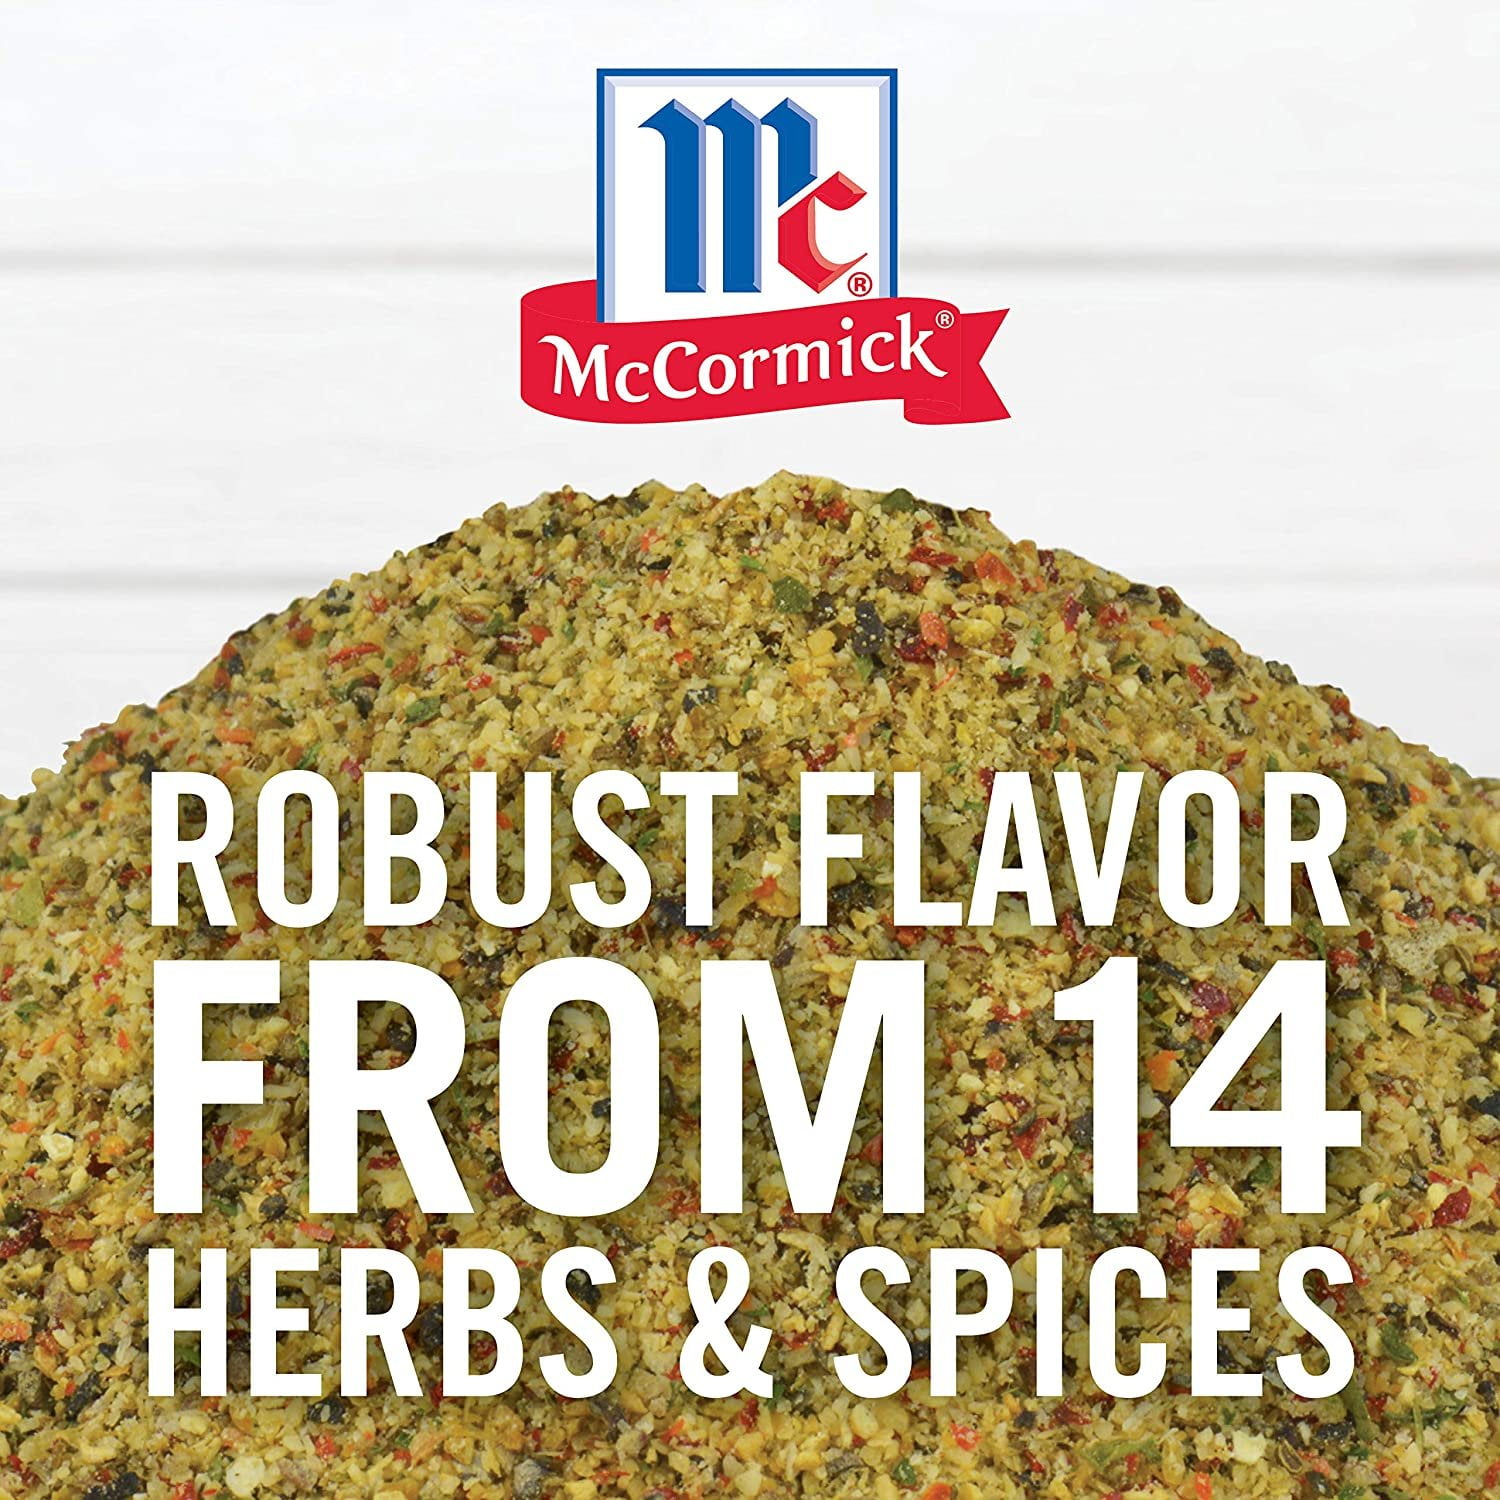 Mr. C's Salt Free Seasoning — Classic Spices